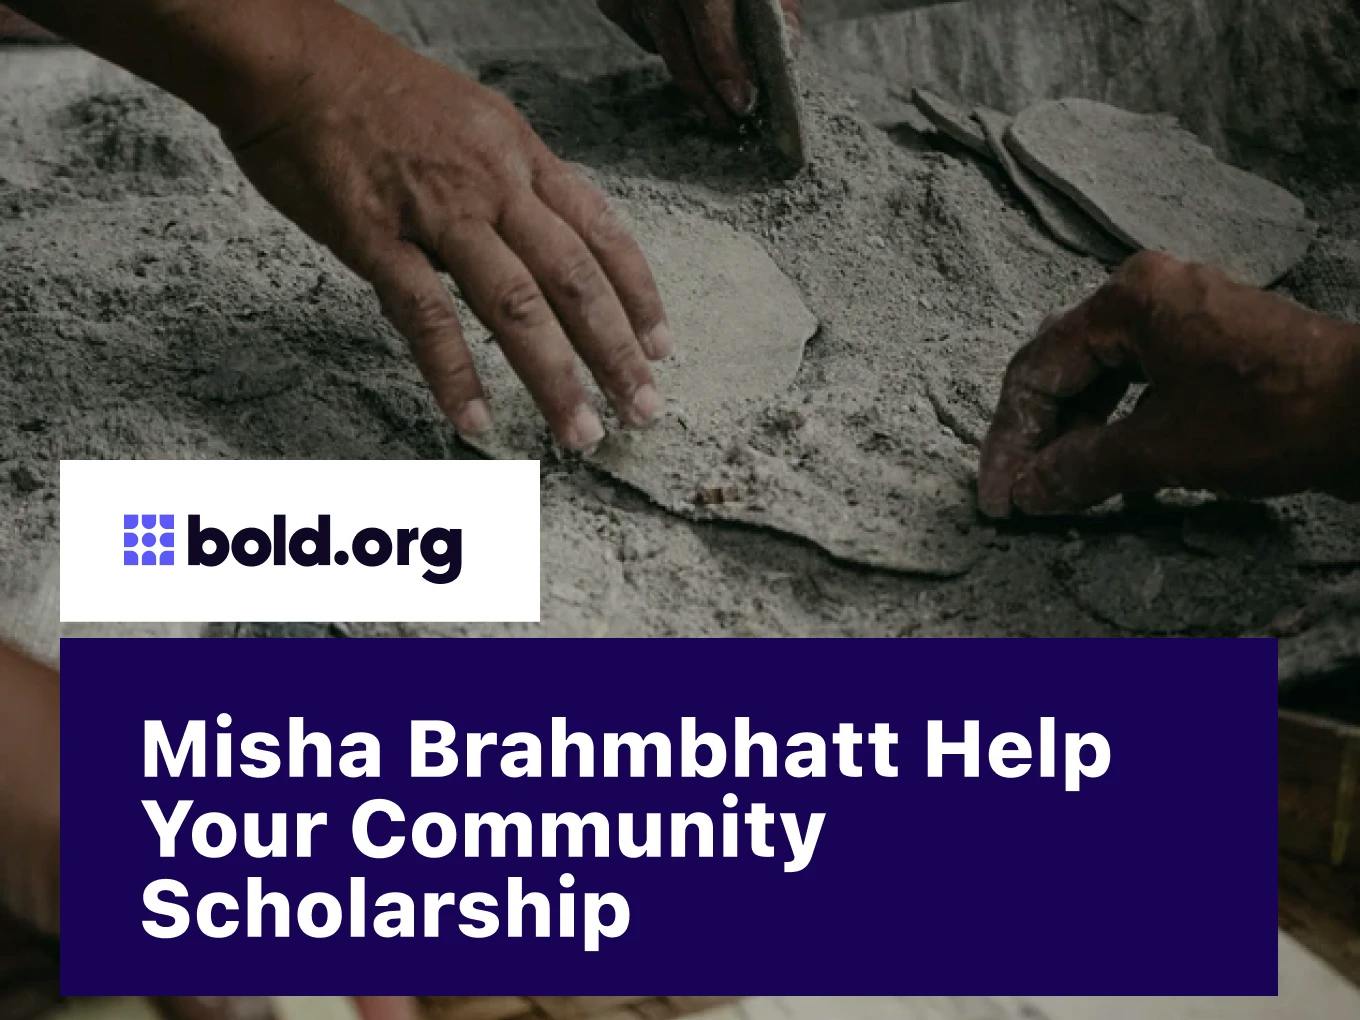 Misha Brahmbhatt Help Your Community Scholarship